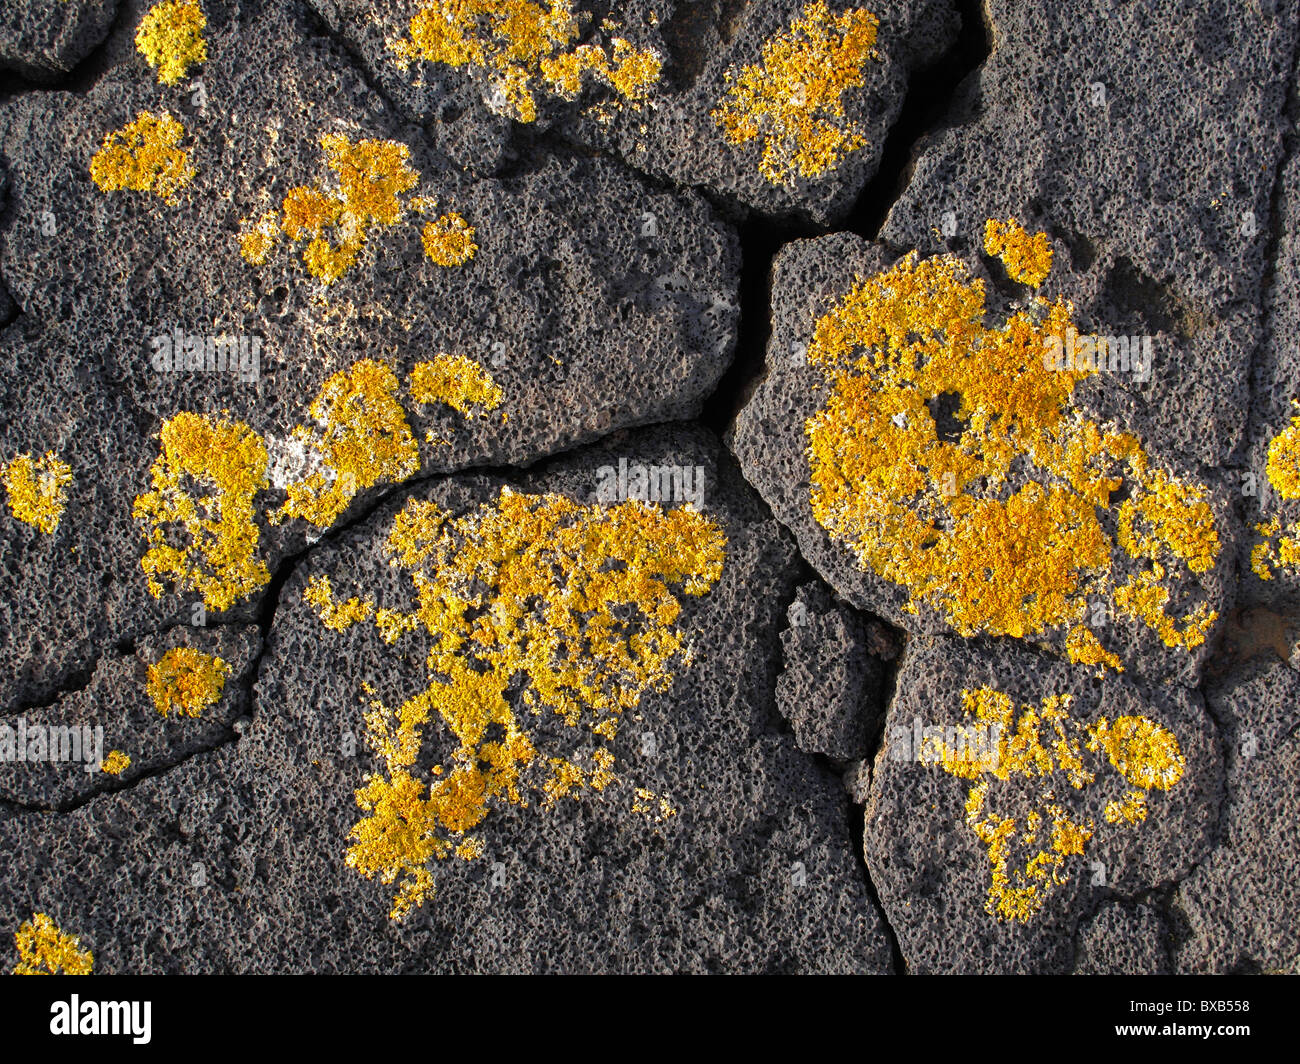 Yellow-orange coloured lichen on lava rocks, Lanzarote, Canary Islands, Spain, Europe Stock Photo